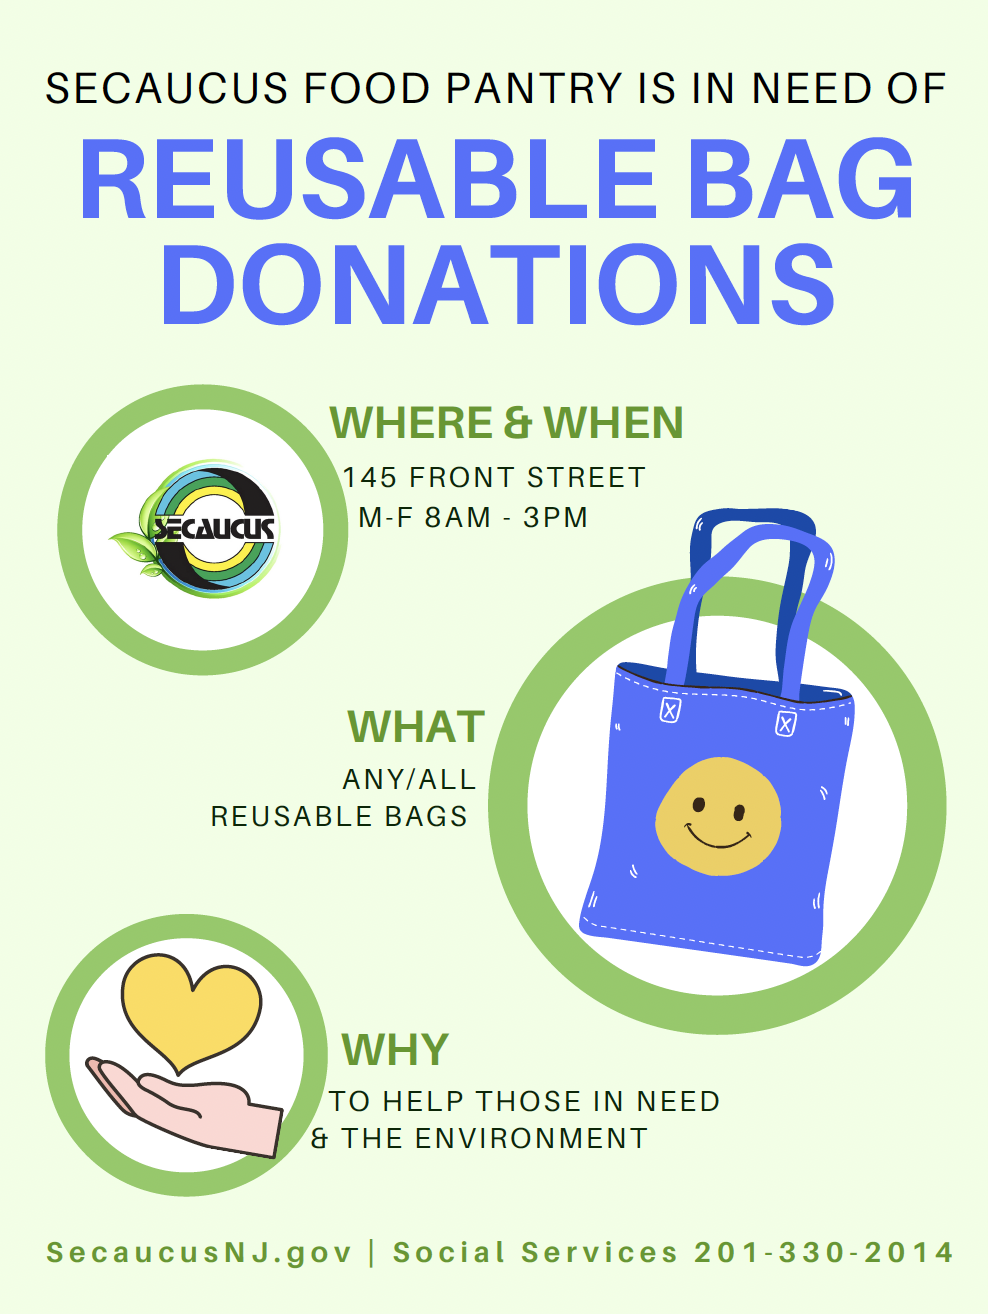 Reusable Bag Donations for Secaucus Food Pantry